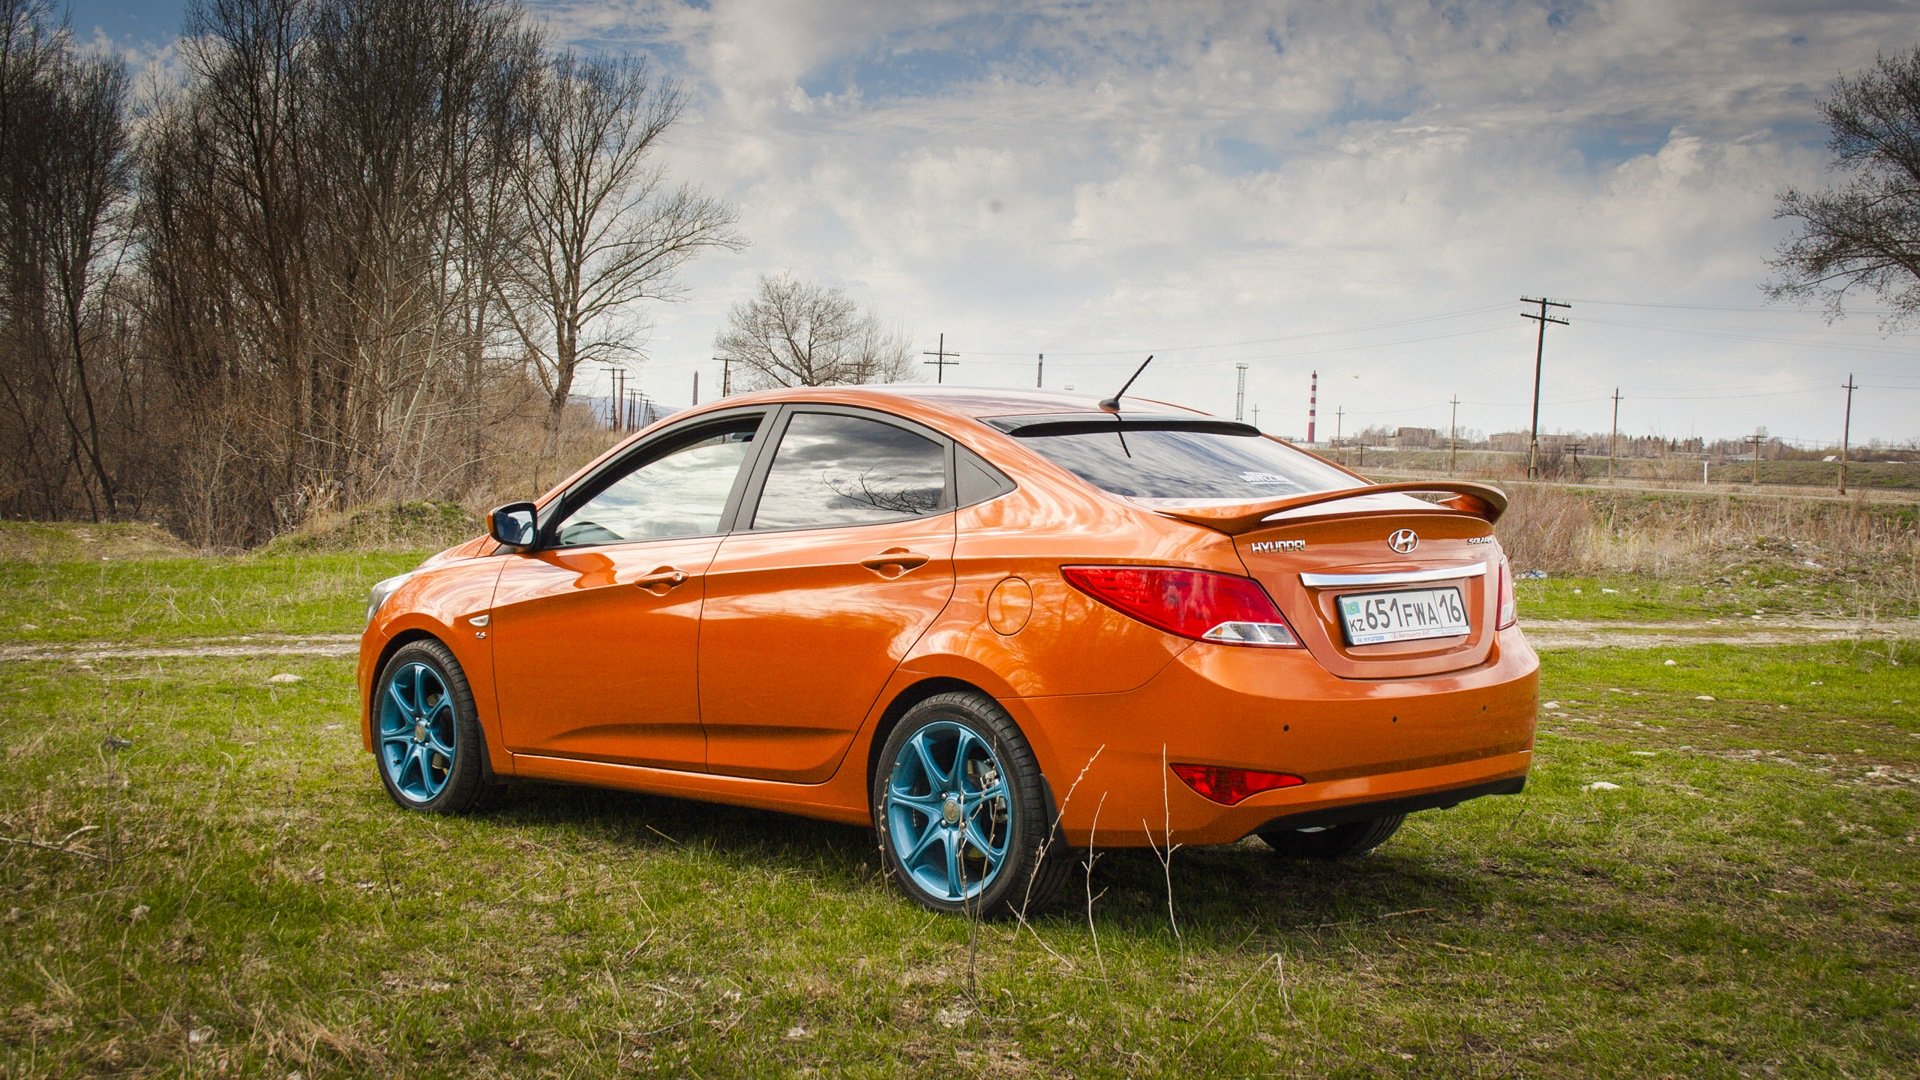 Солярис со. Хендай Солярис оранжевый. Хендай Солярис r17 оранжевая. Hyundai Solaris 2014 оранжевый. Хендай Солярис 2 оранжевый.